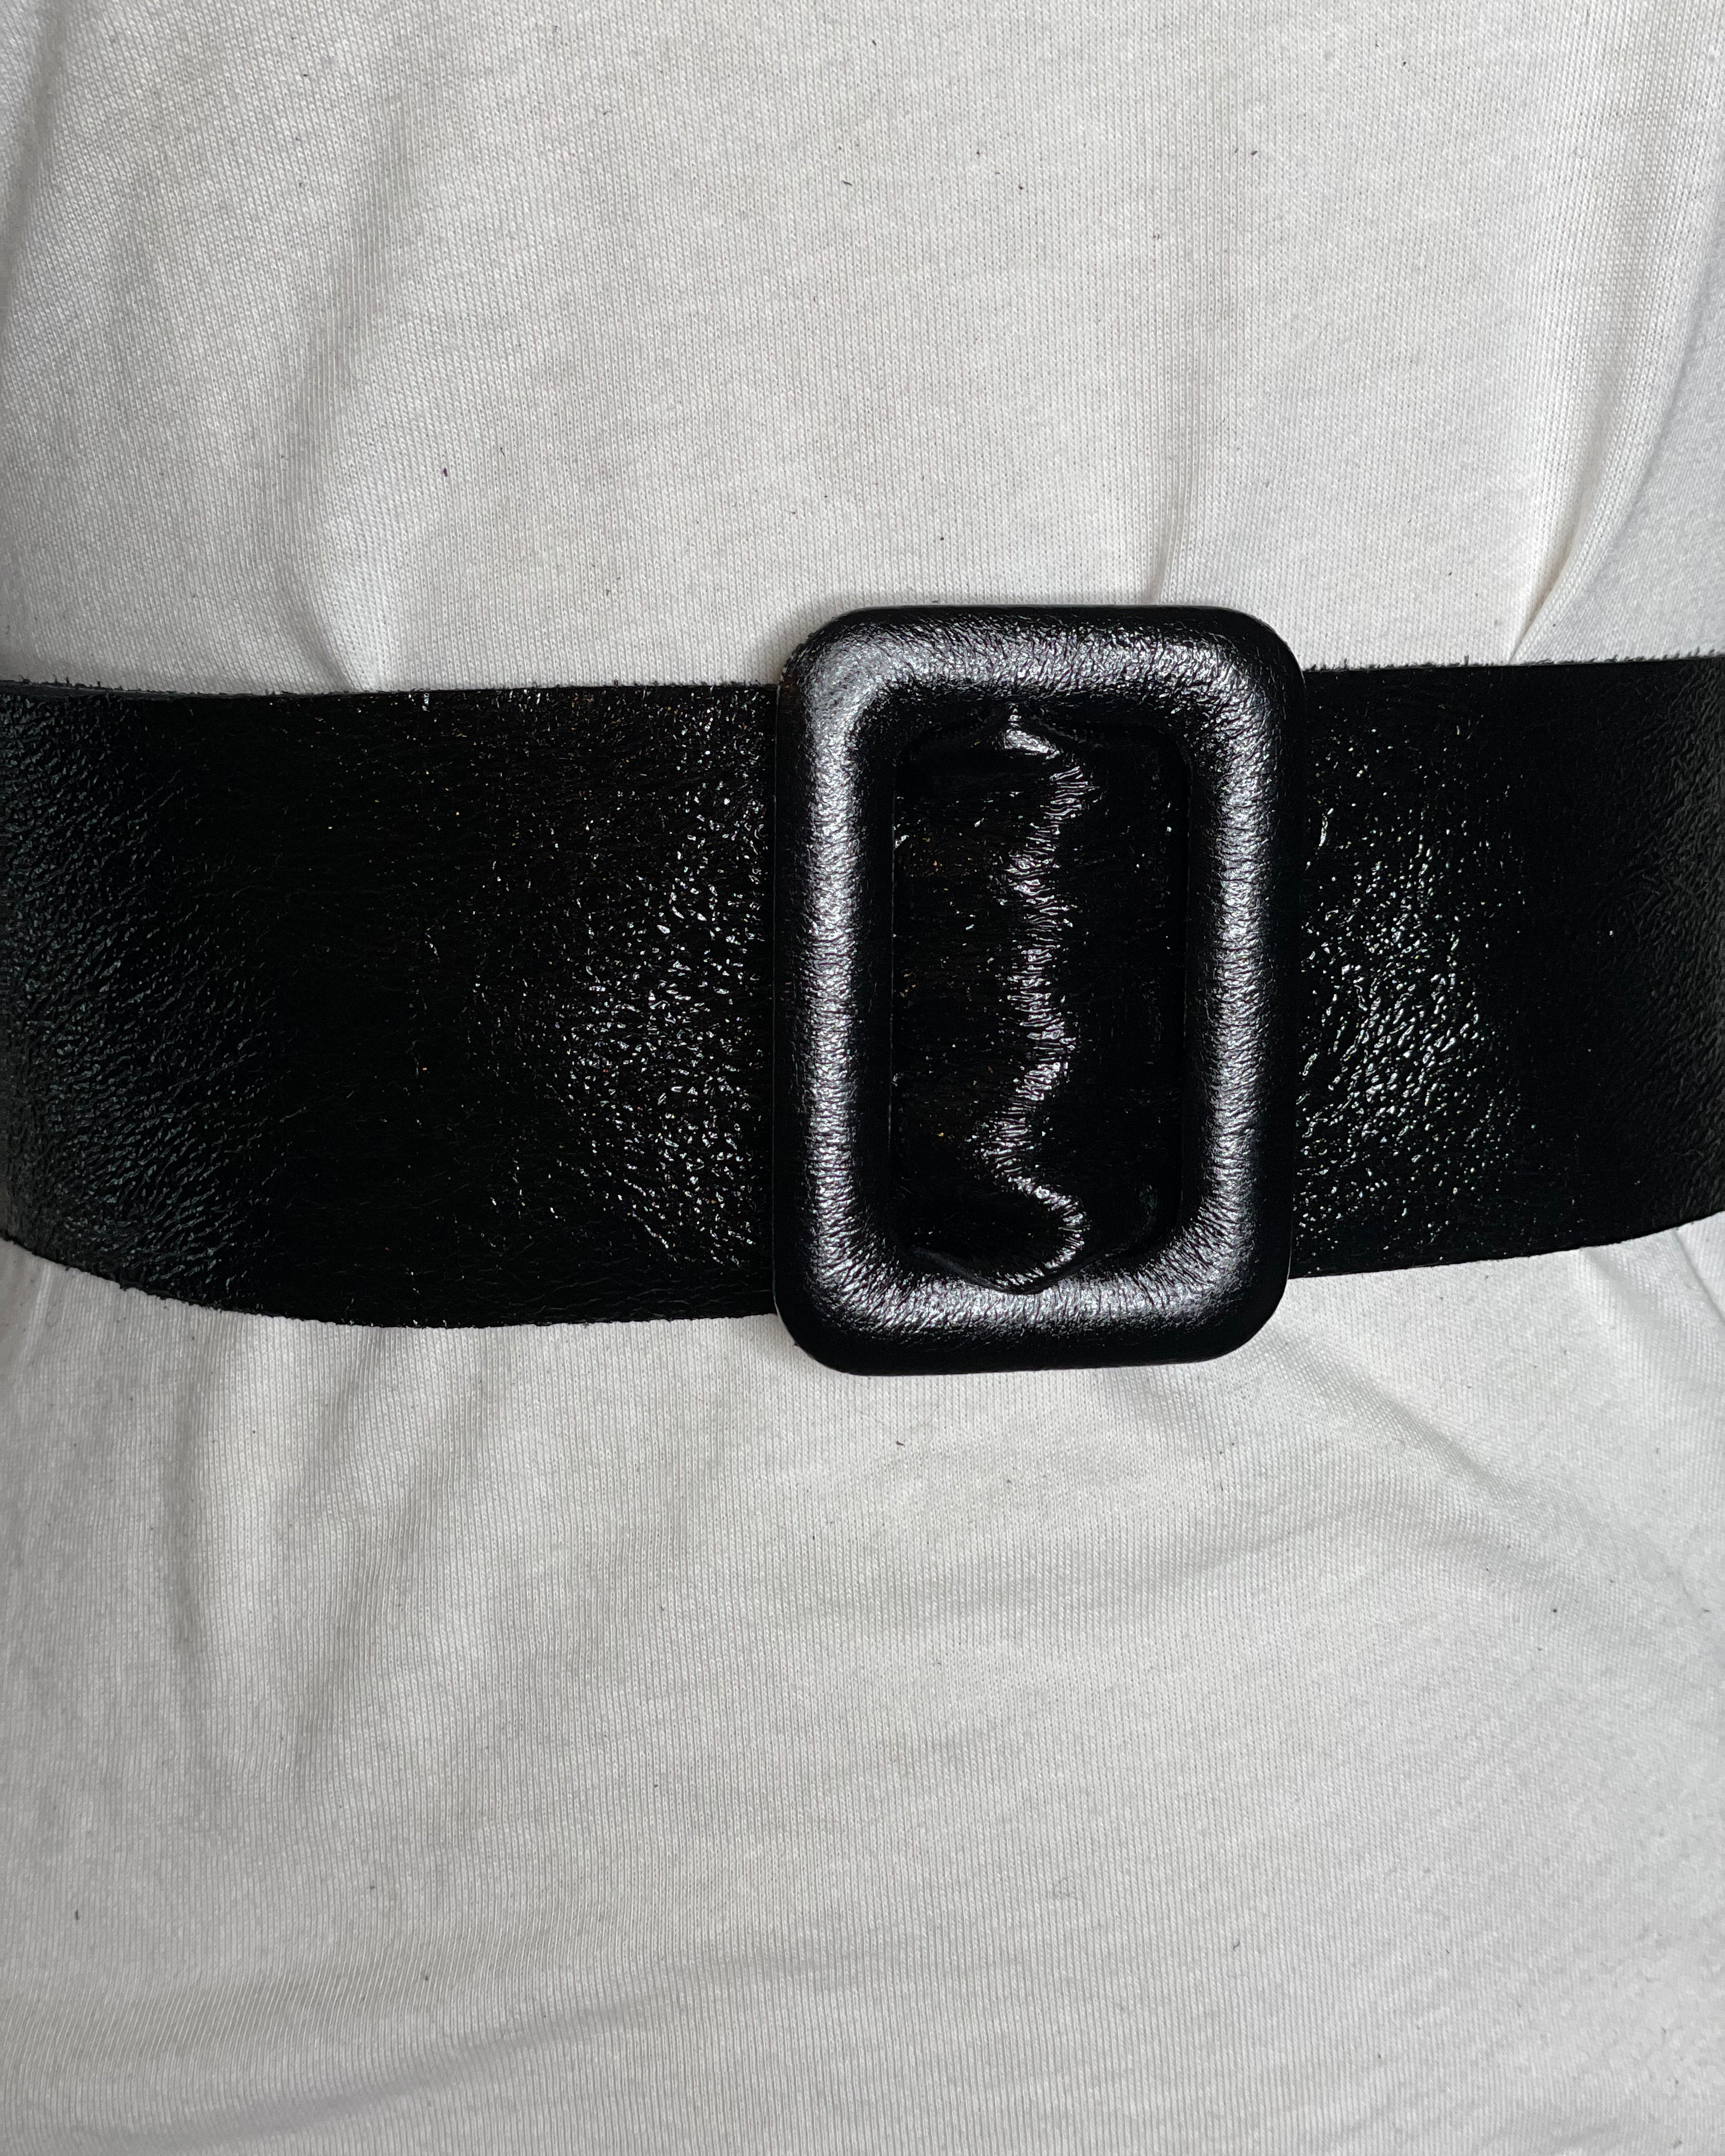 Leather Belt in Black or Gold.